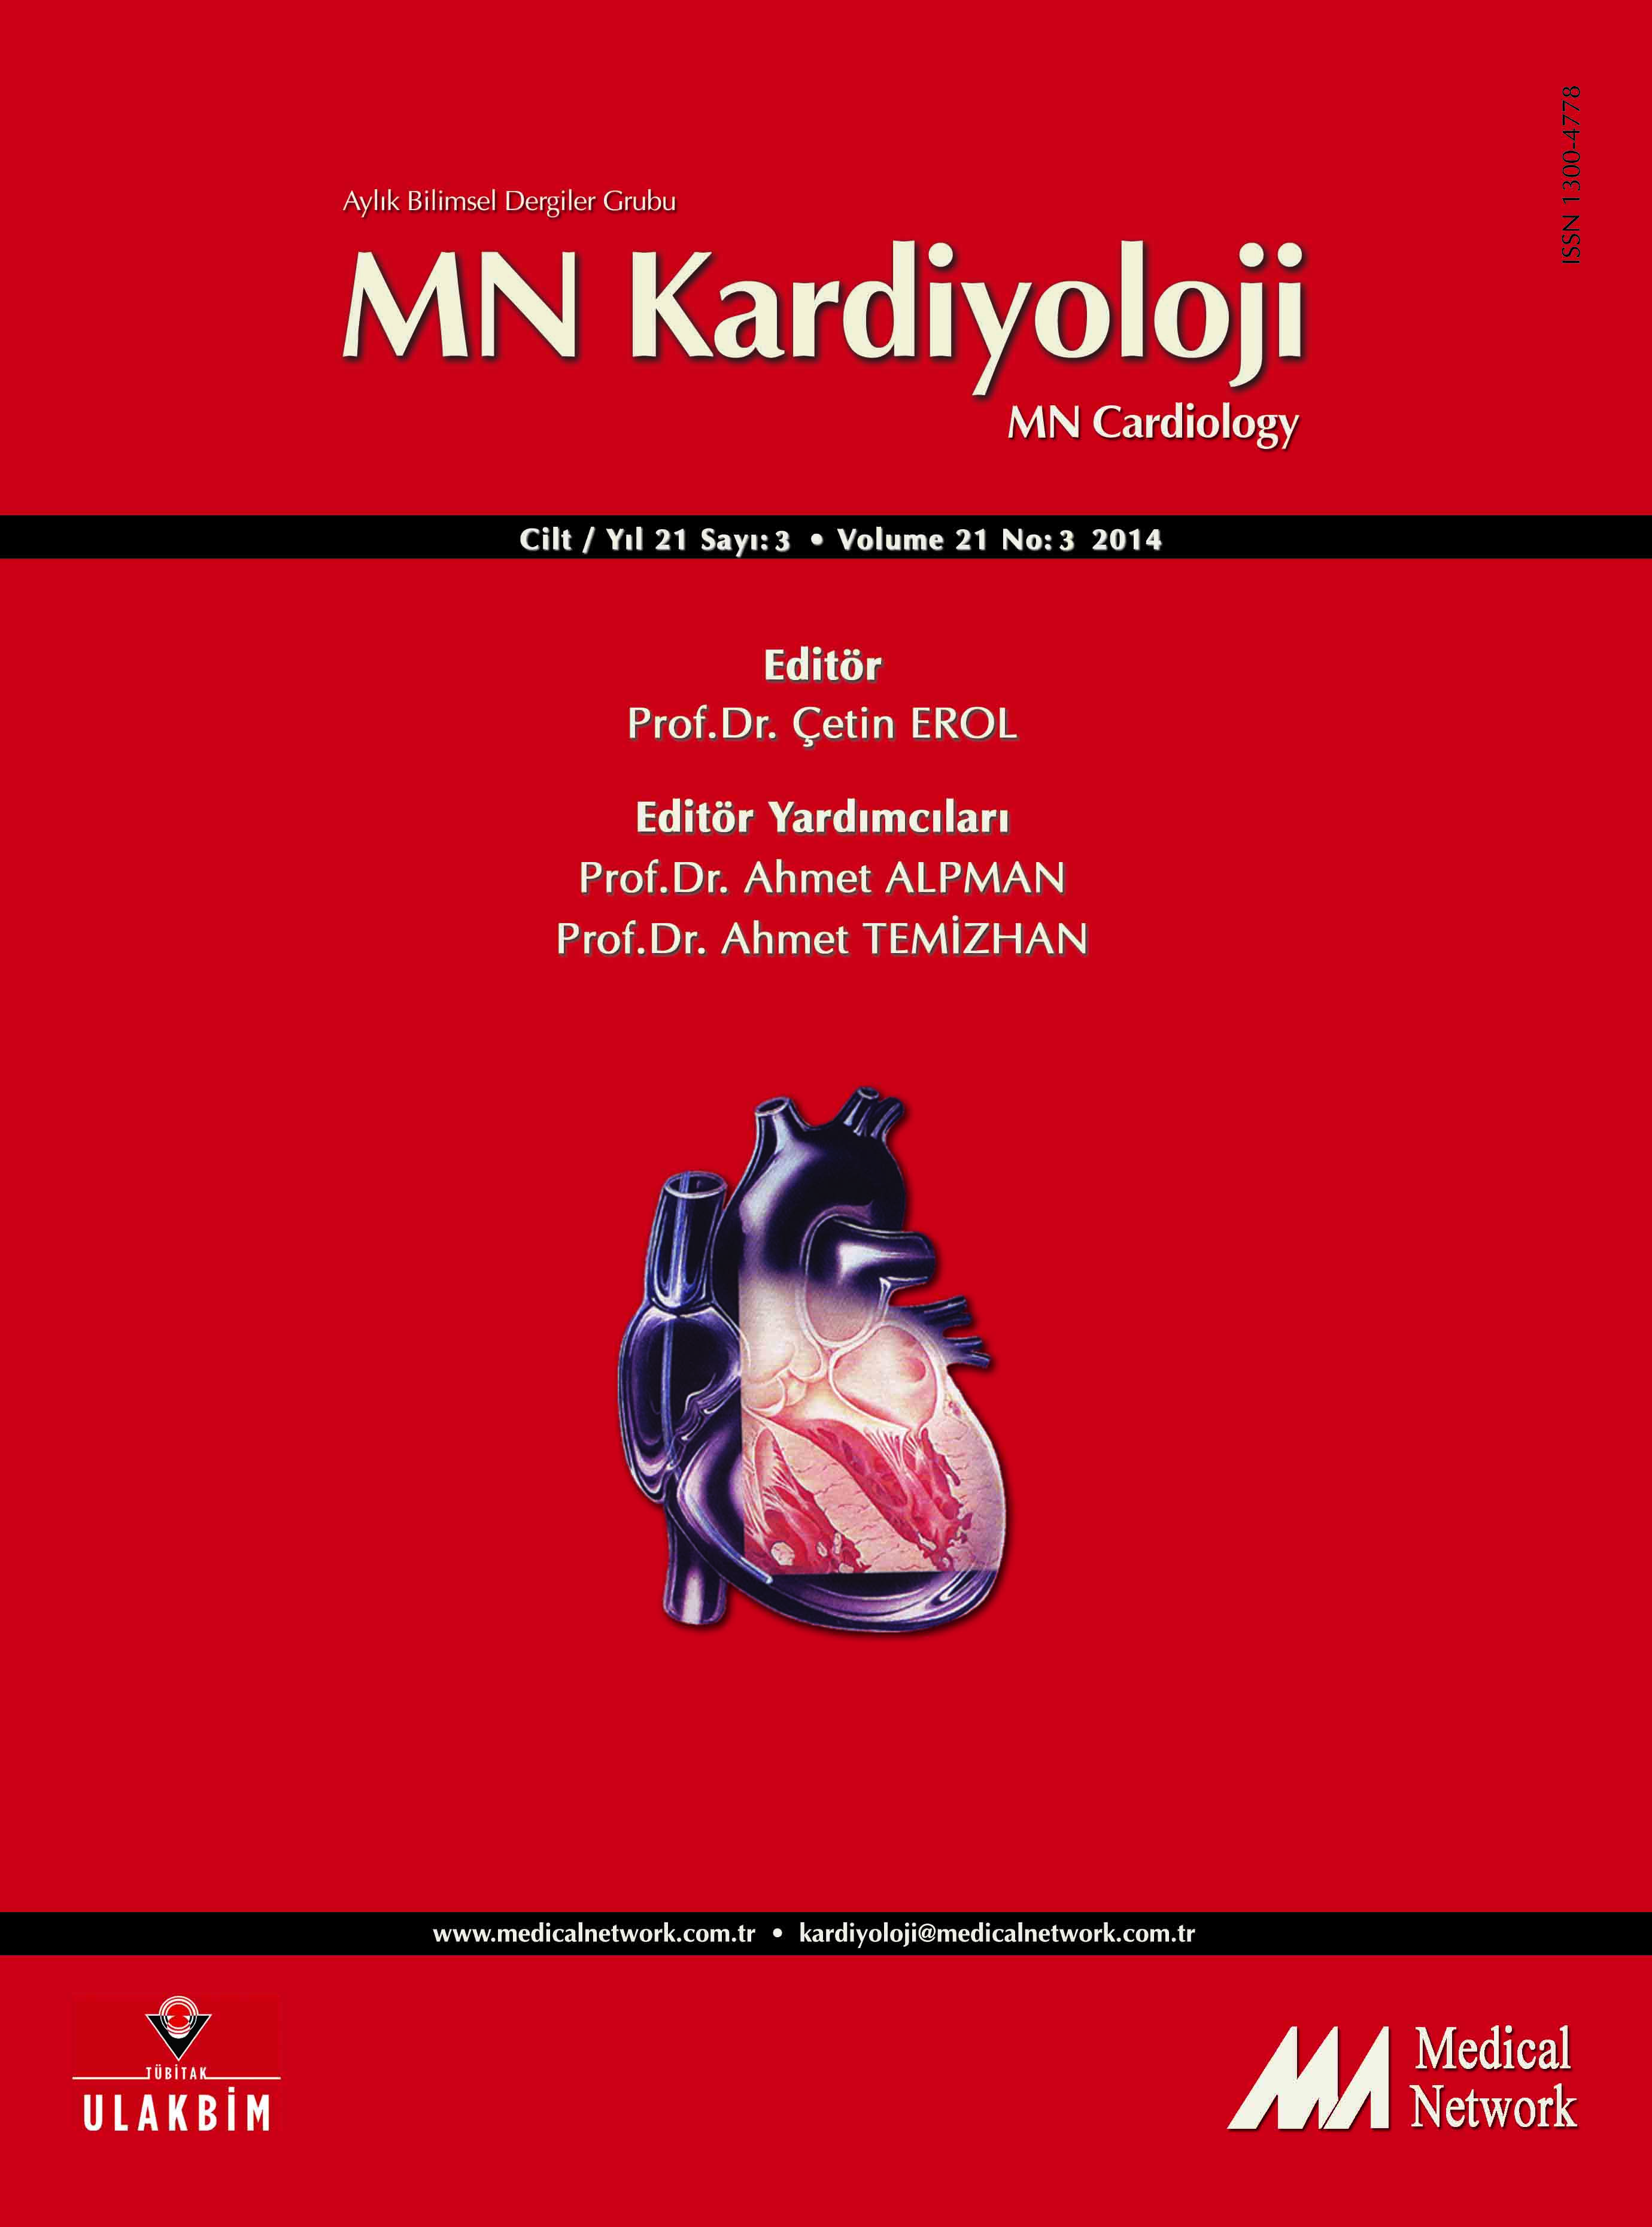 <p>MN Kardiyoloji Cilt: 21 Say: 3 2014 (MN Cardiology Volume: 21 No: 3 2014)</p>